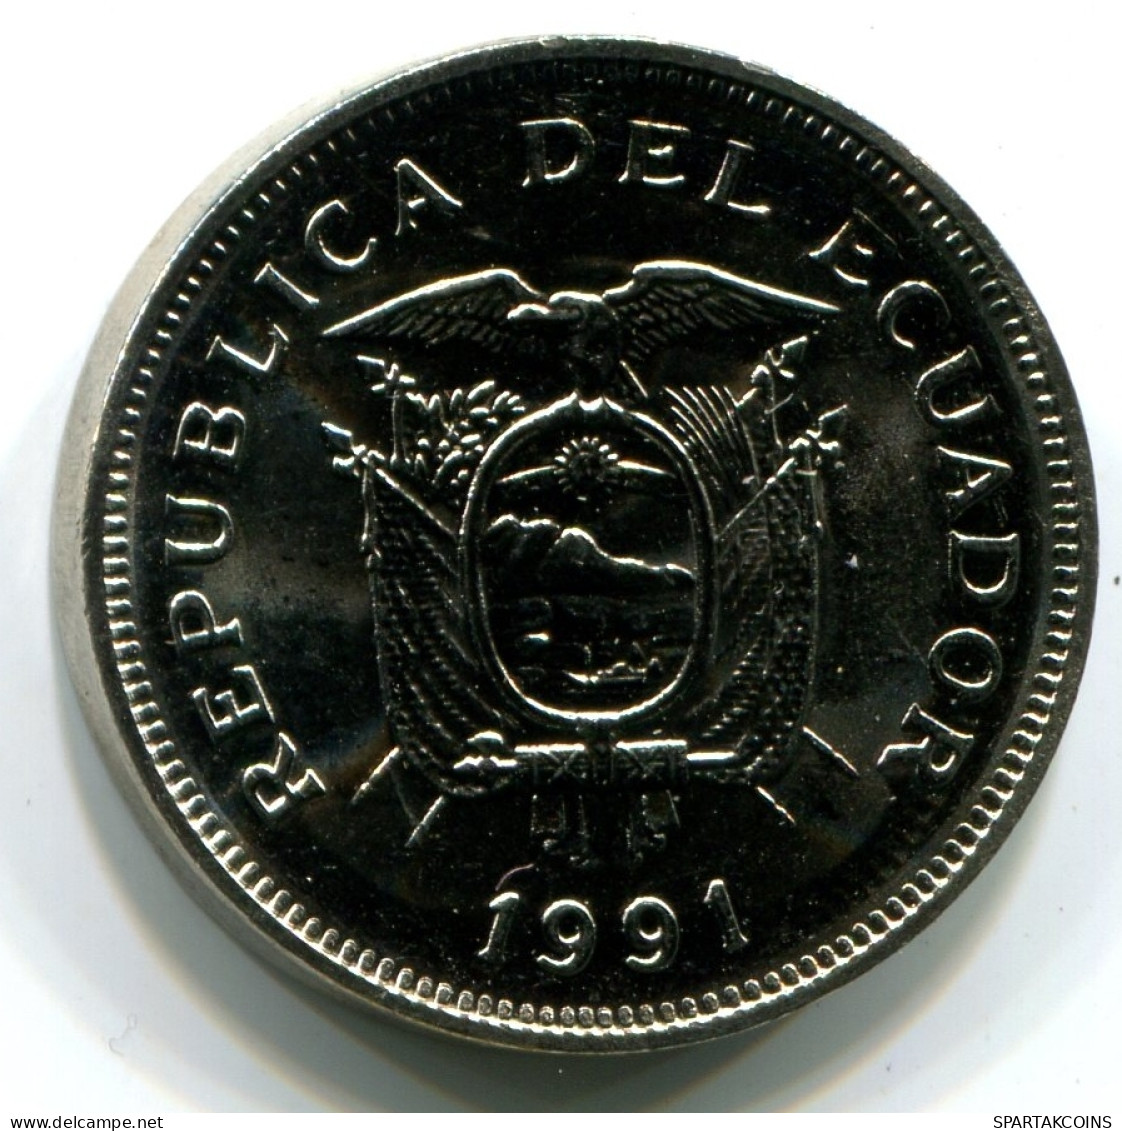 20 SUCRE 1991 ECUADOR UNC Coin #W11118.U - Equateur